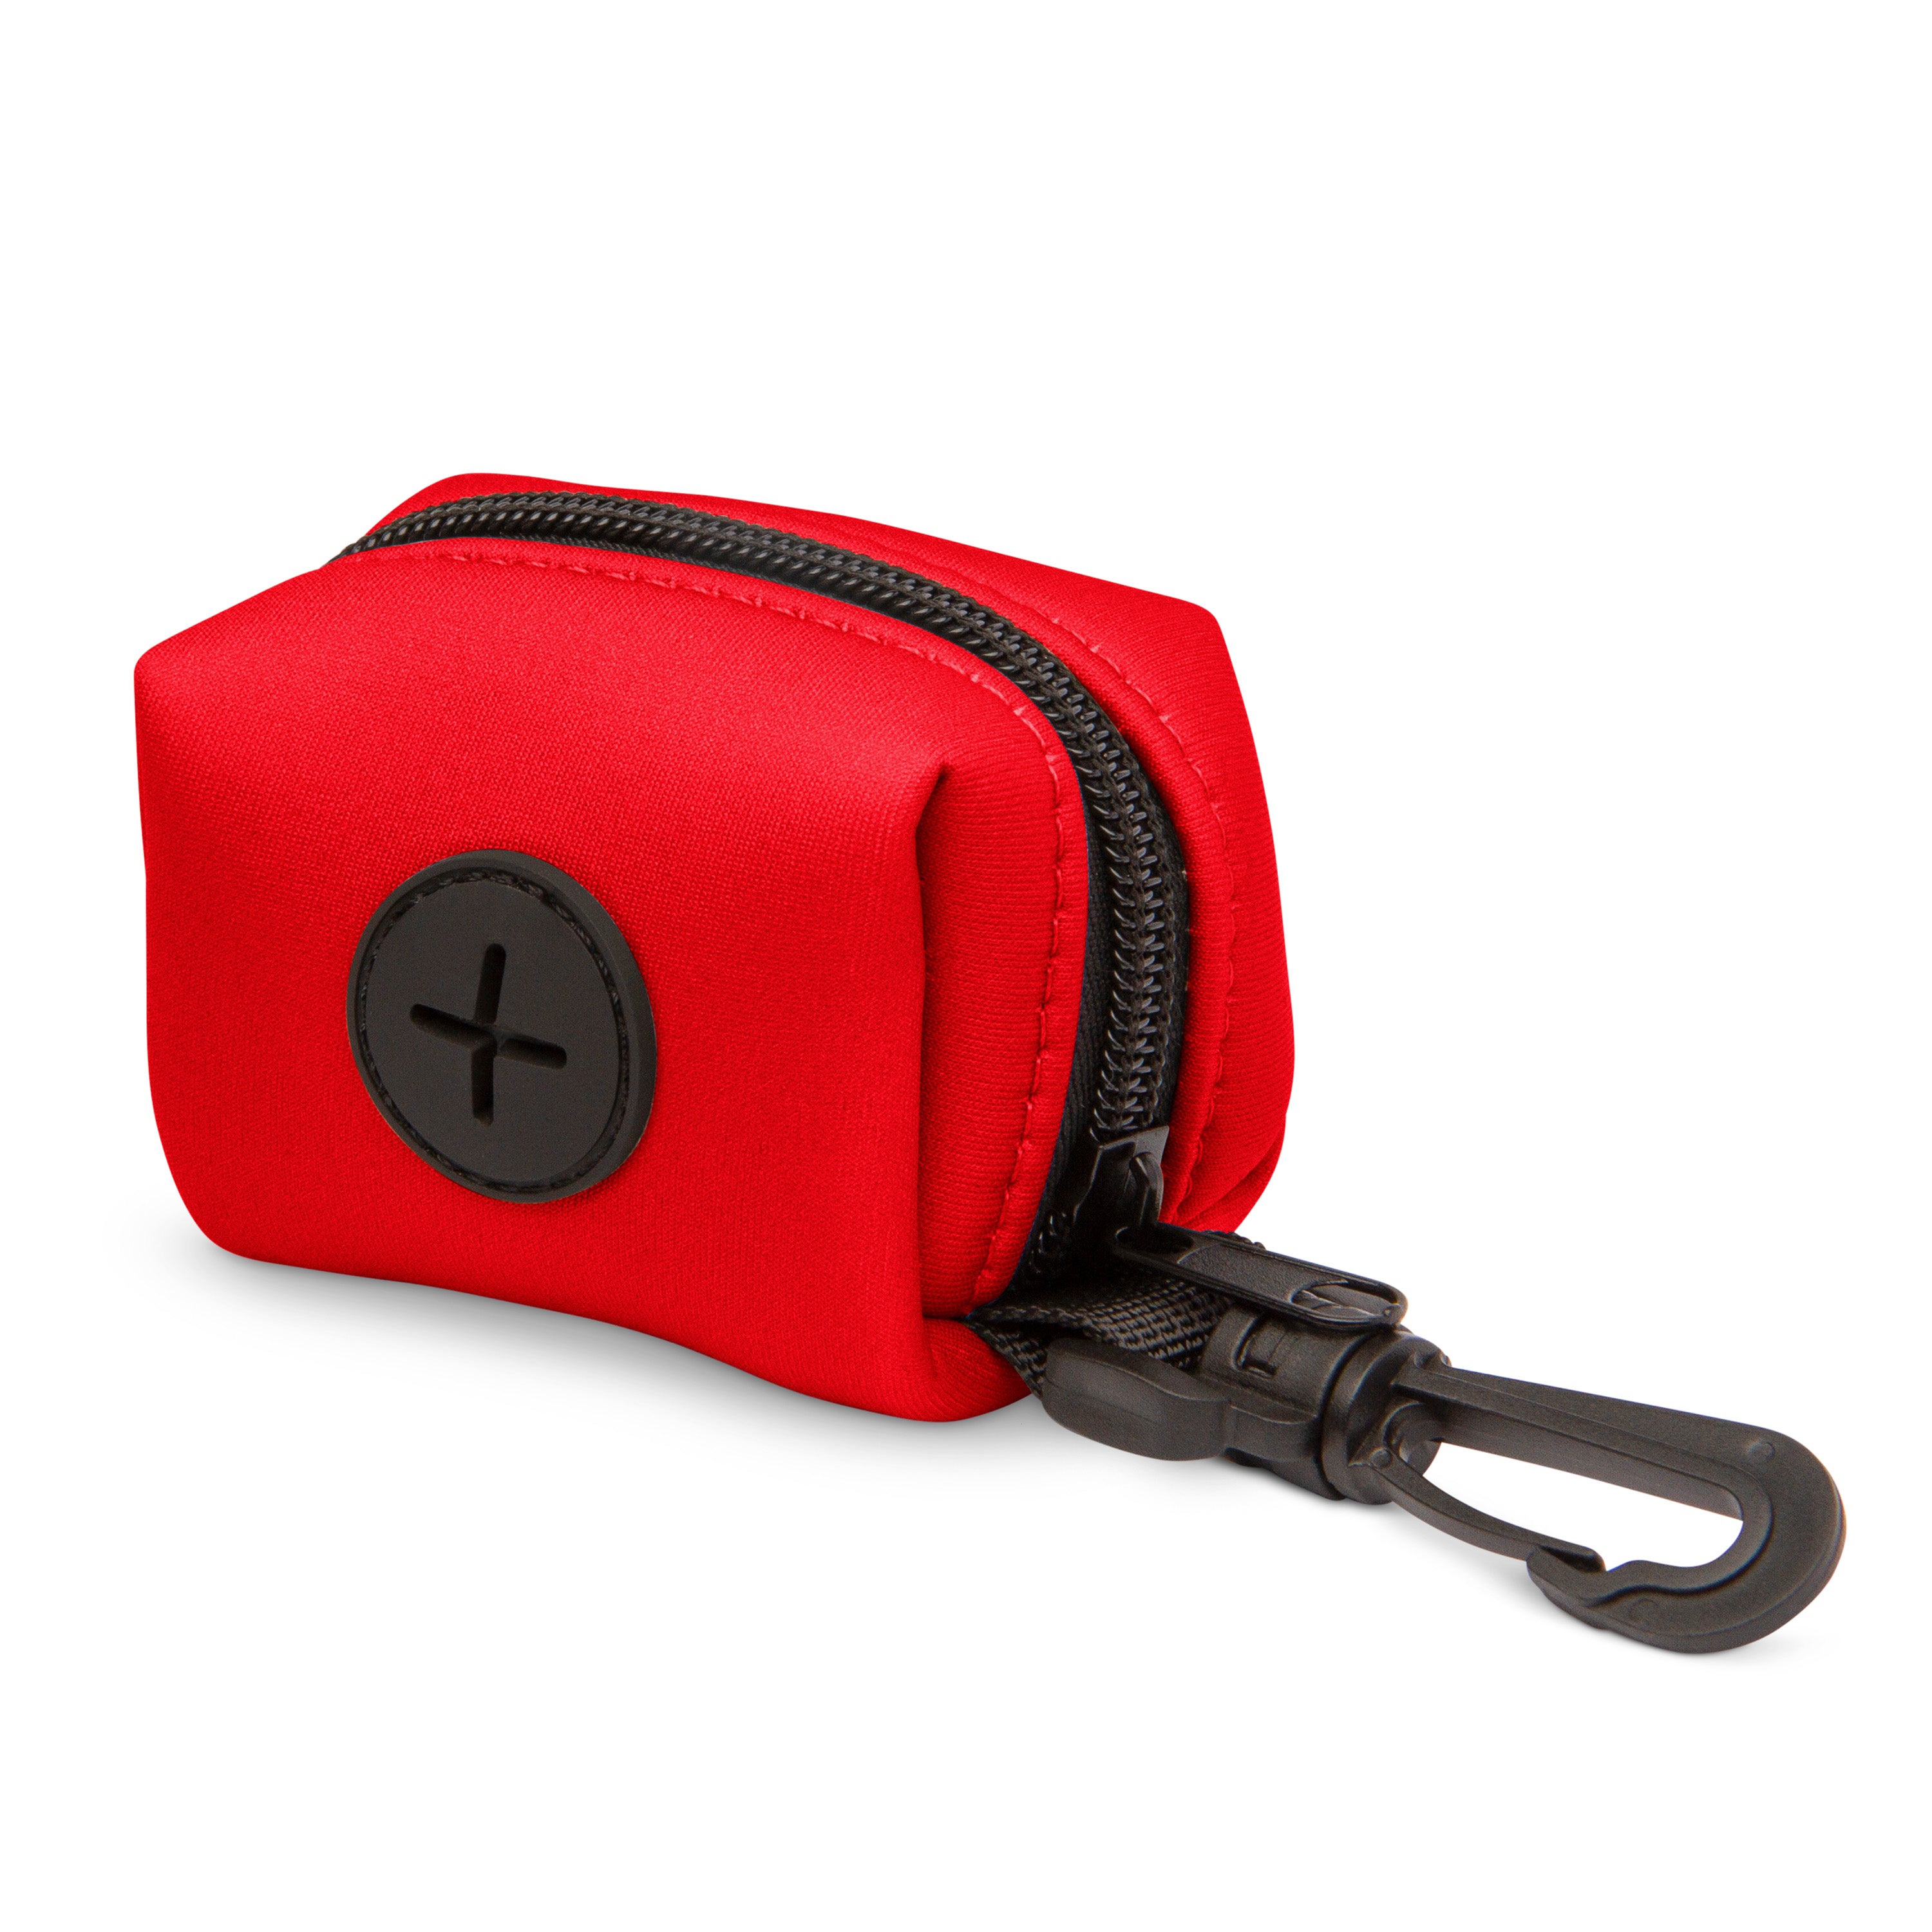 The Modern Dog Company - Ruby Red Poop Bag Holder